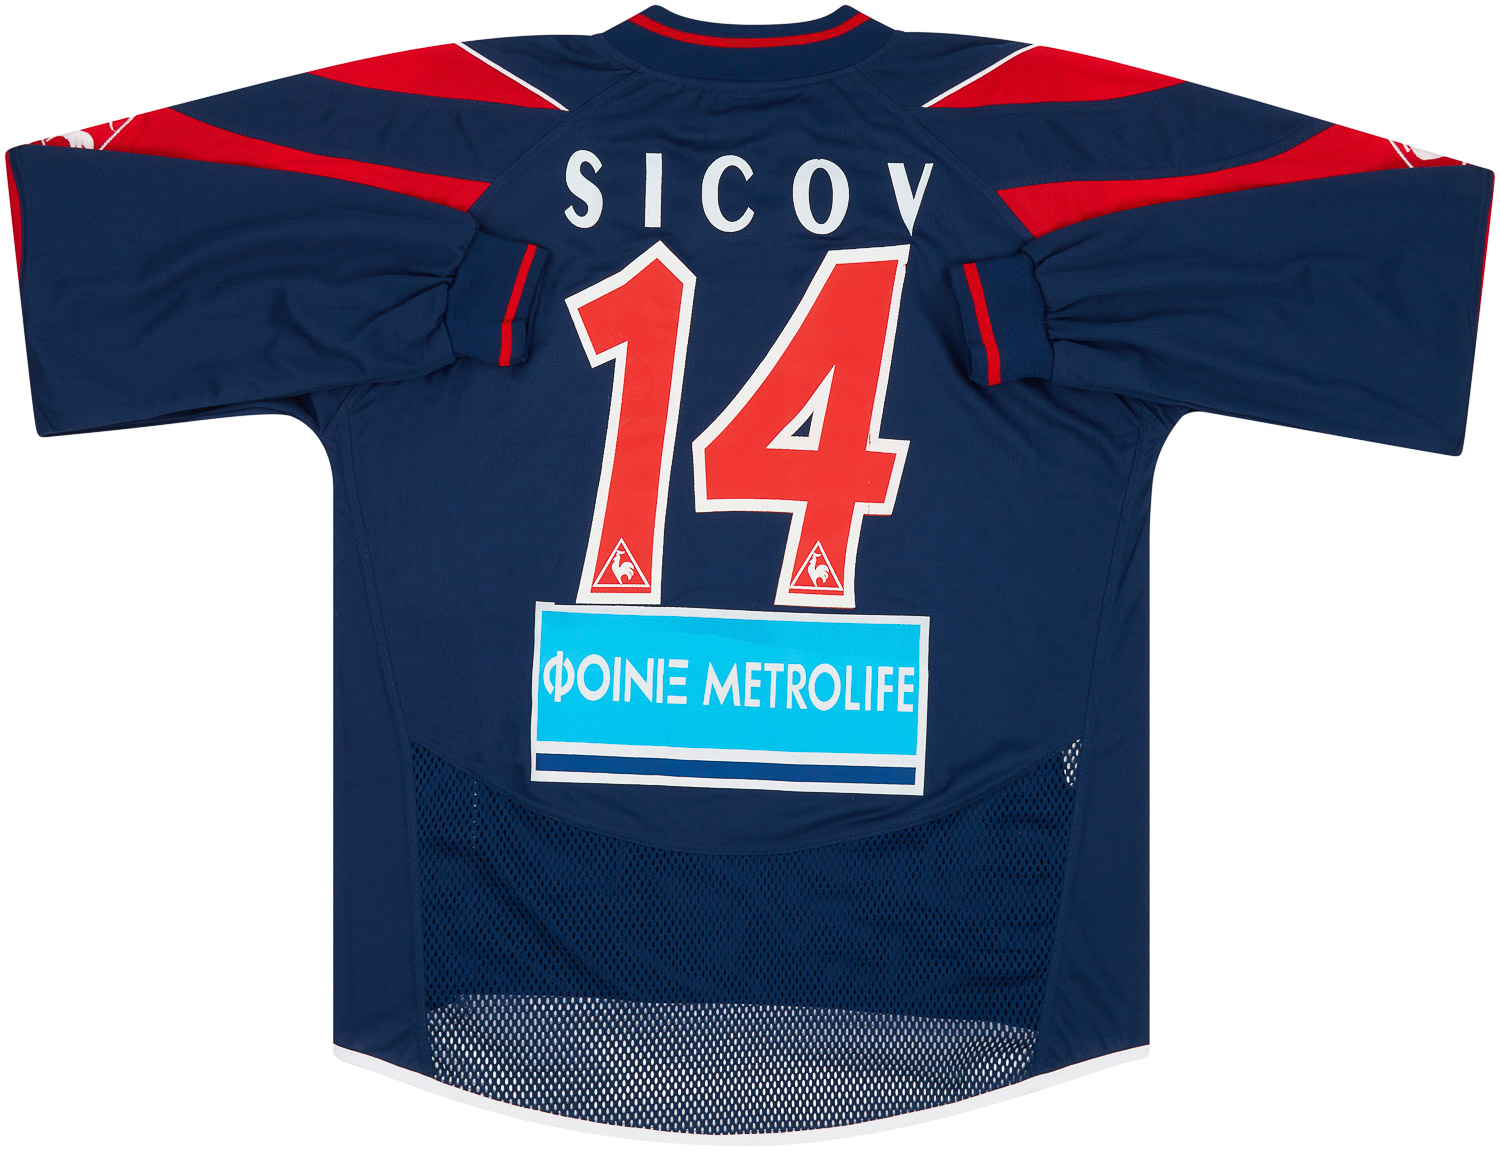 2005-06 Skoda Xanthi Match Issue Away Shirt Sicov #14